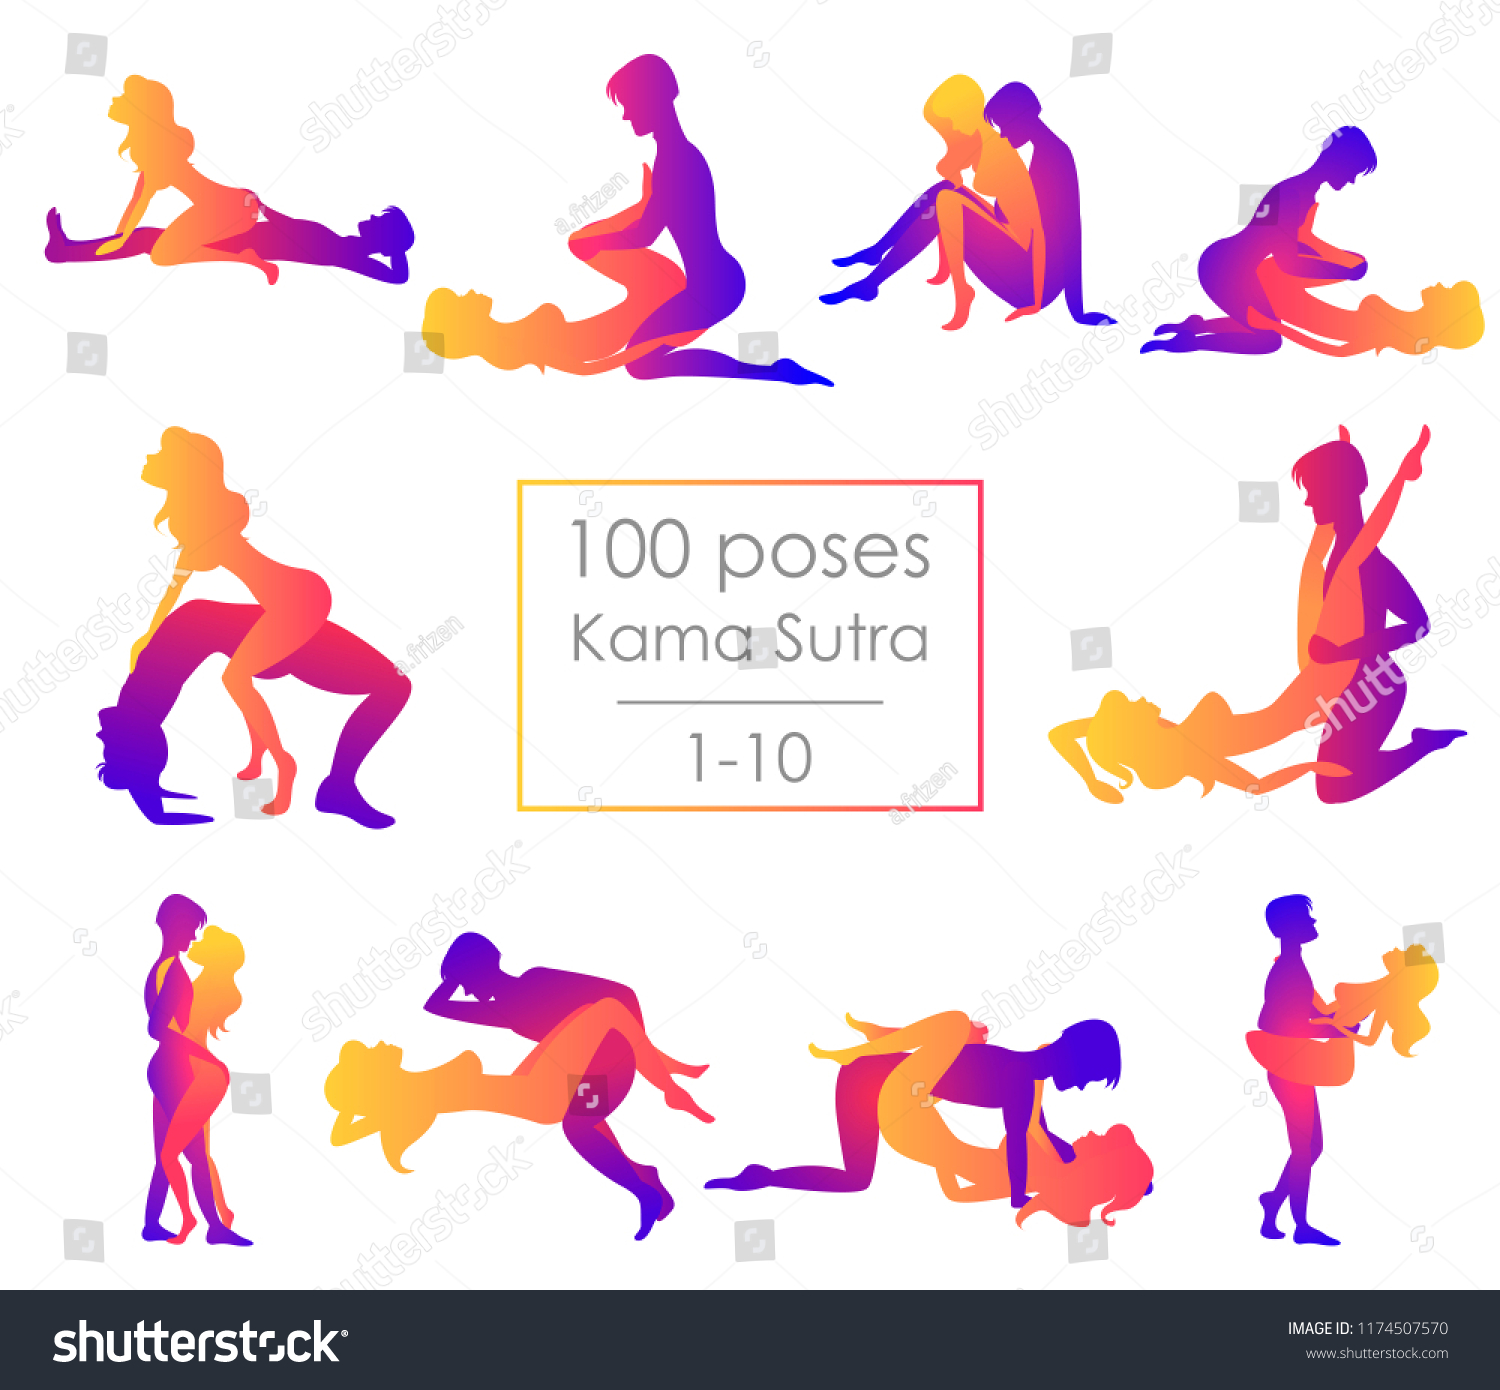 Sex positions karma